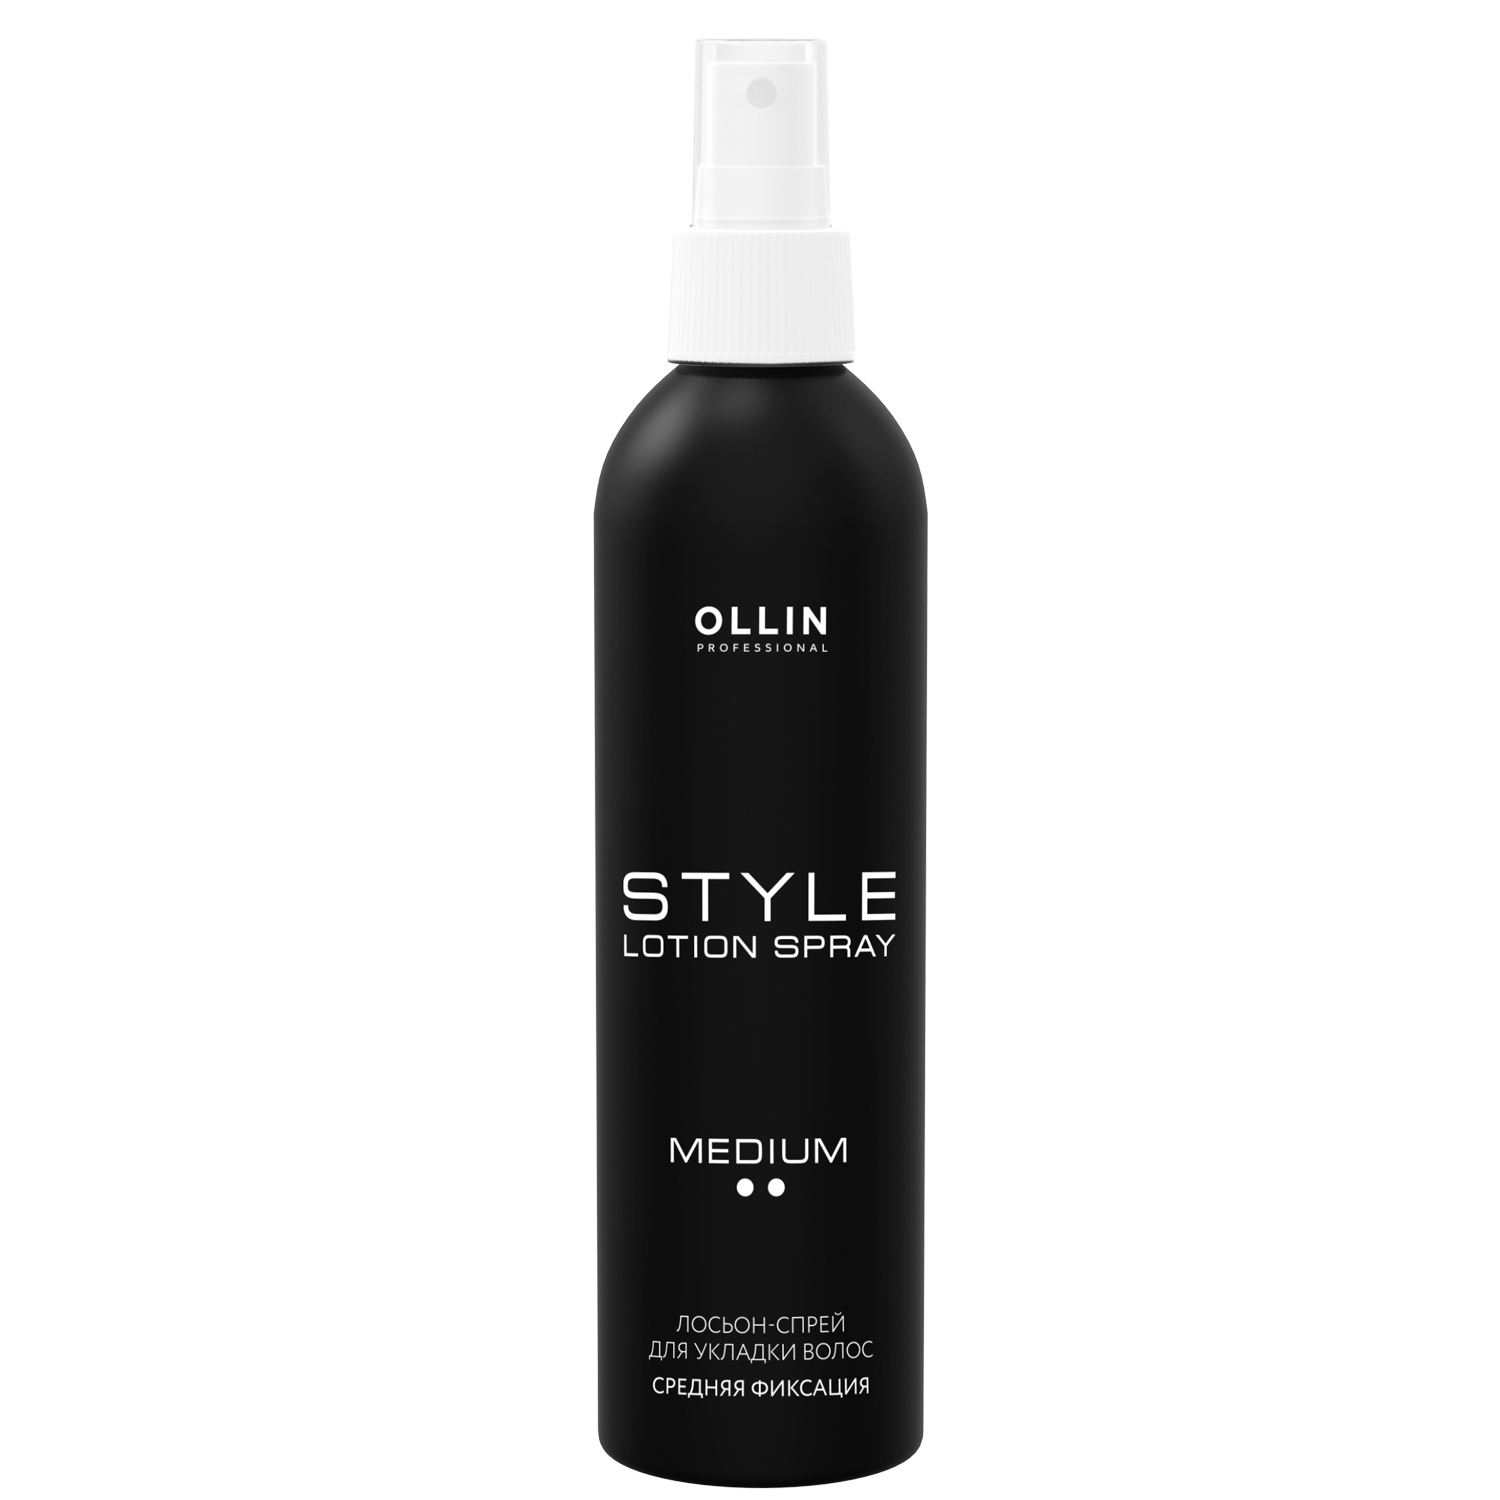 Ollin Professional Лосьон-спрей для укладки волос средней фиксации, 250 мл (Ollin Professional, Style) лосьон спрей ollin professional style д укладки волос средней фиксации 250 мл